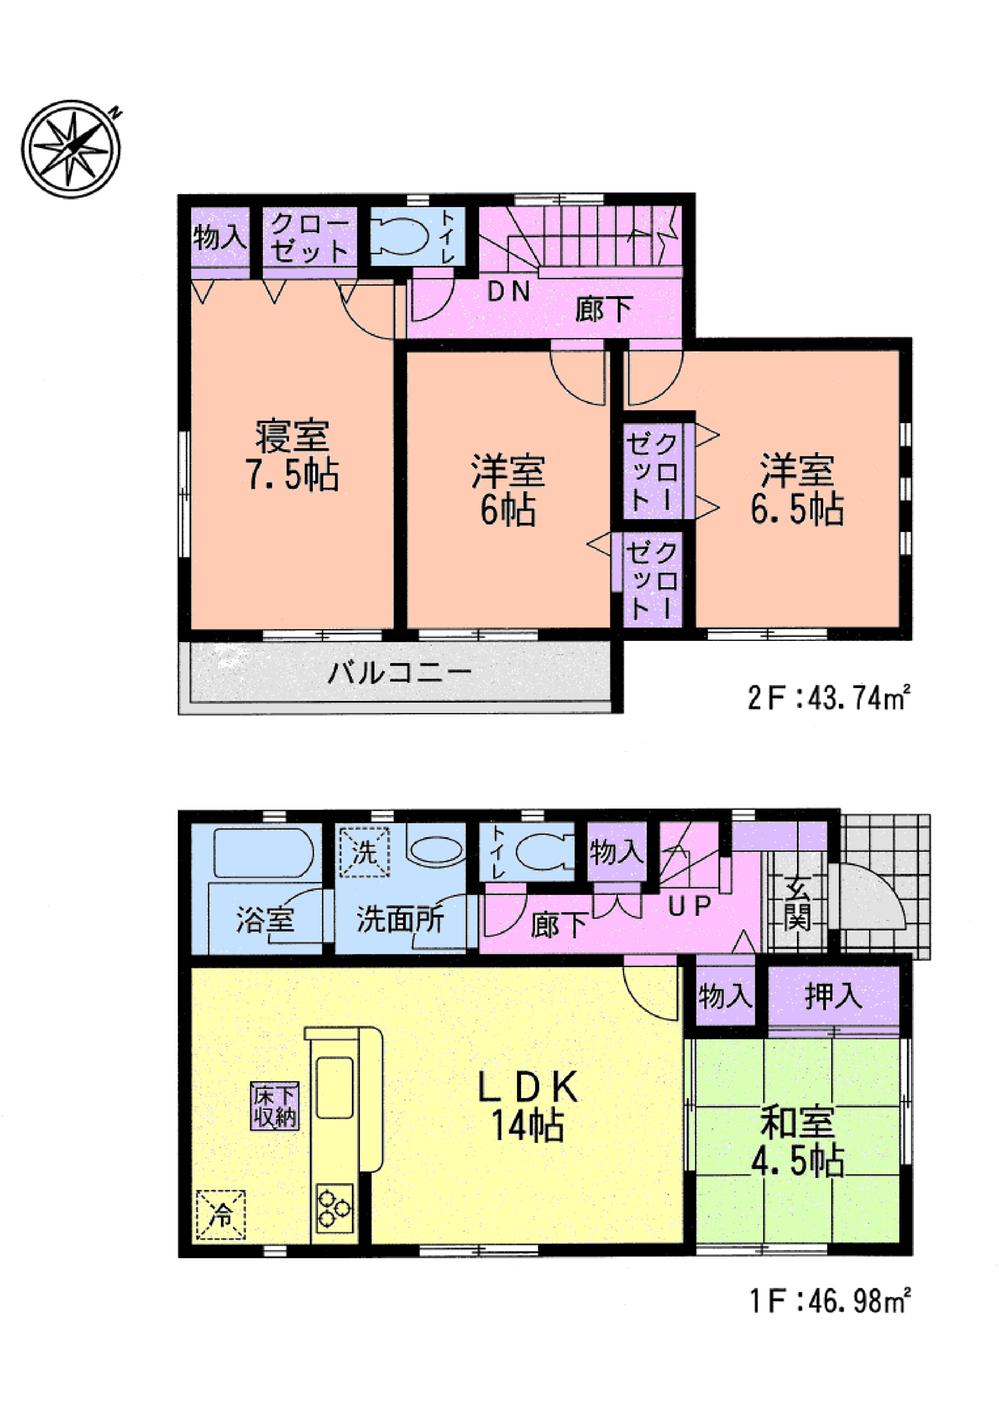 Floor plan. (Soya 12th 3 Building), Price 17.5 million yen, 4LDK, Land area 159.99 sq m , Building area 90.72 sq m